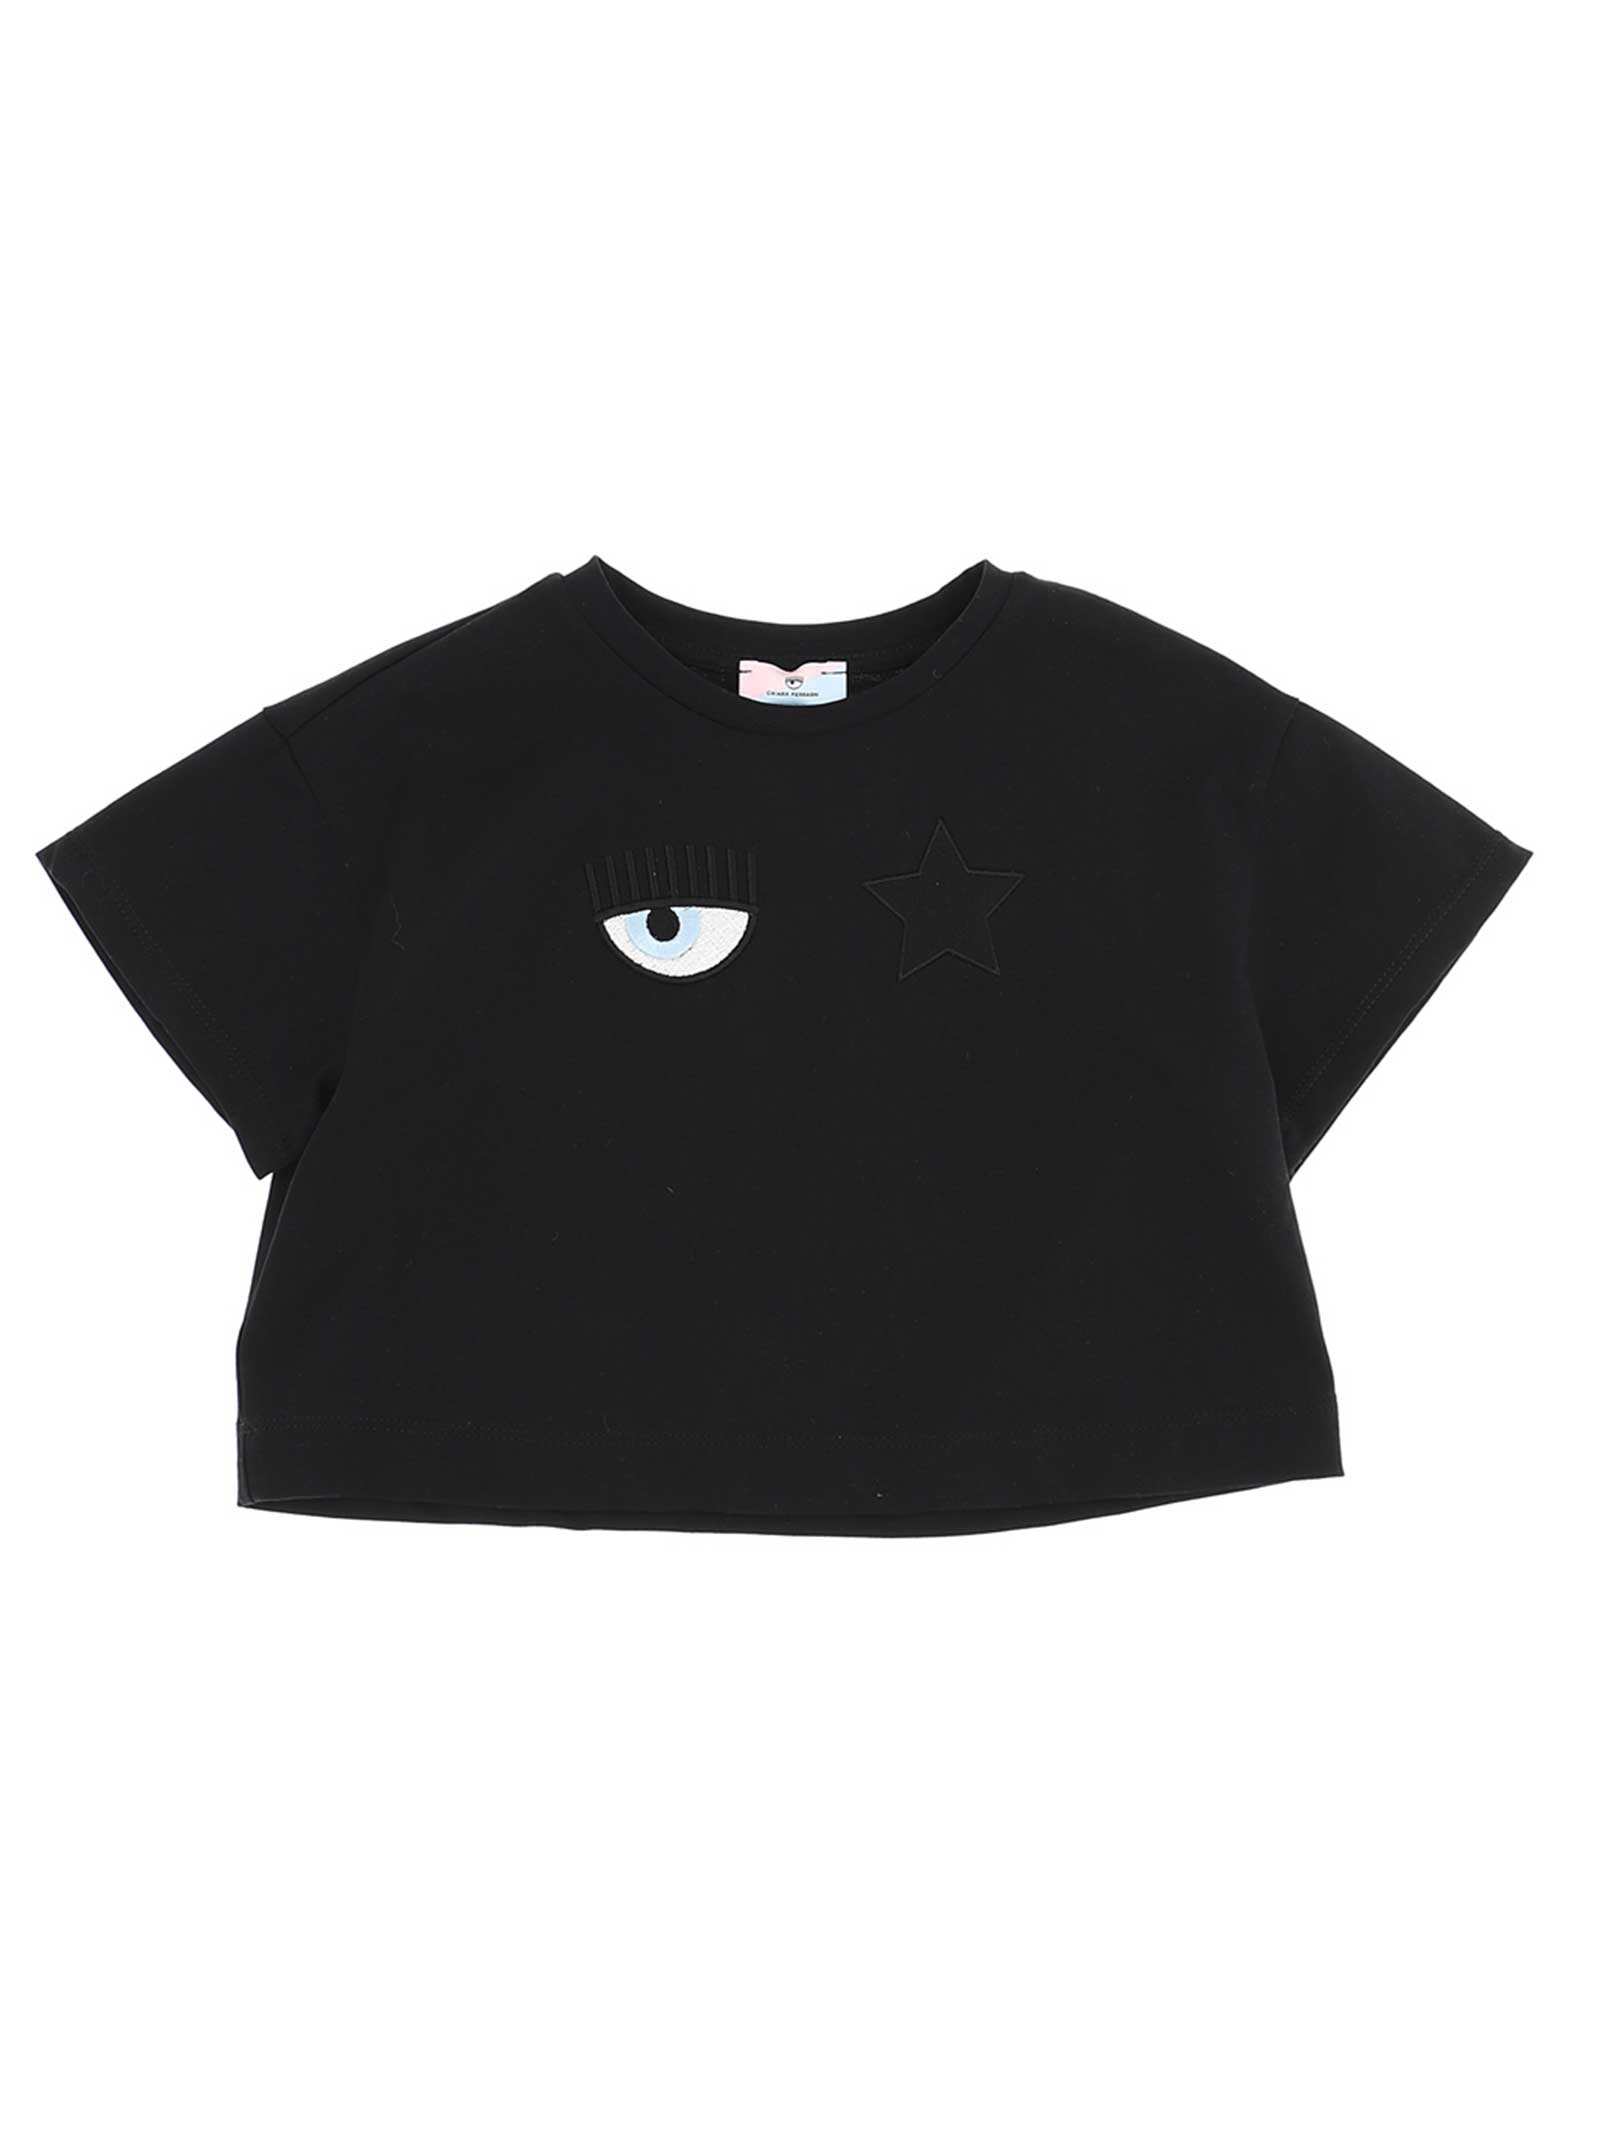 Chiara Ferragni Black T-shirt With Print